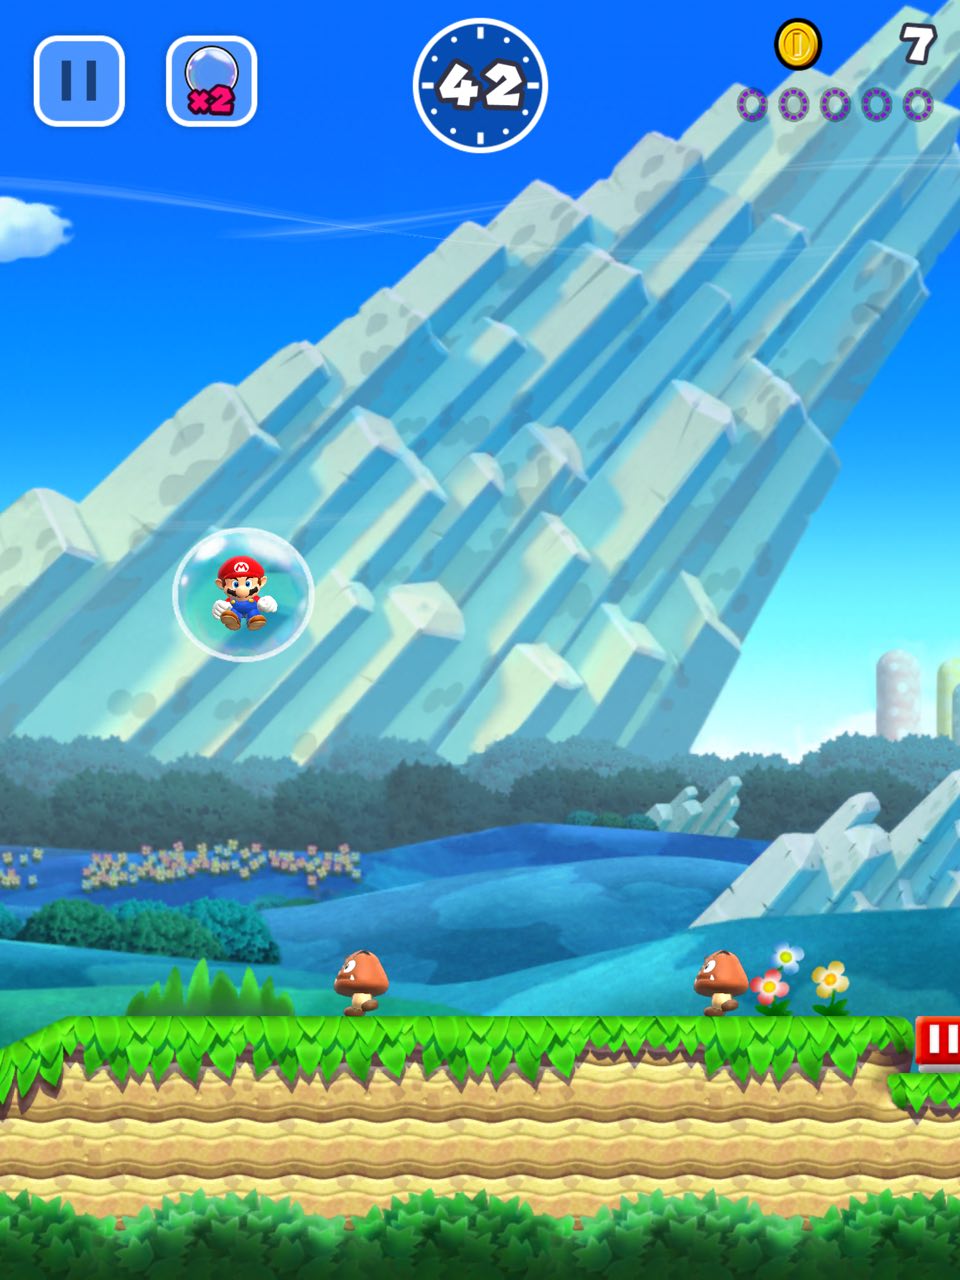 Super Mario Run, Nintendo отлично работает на iPhone 4